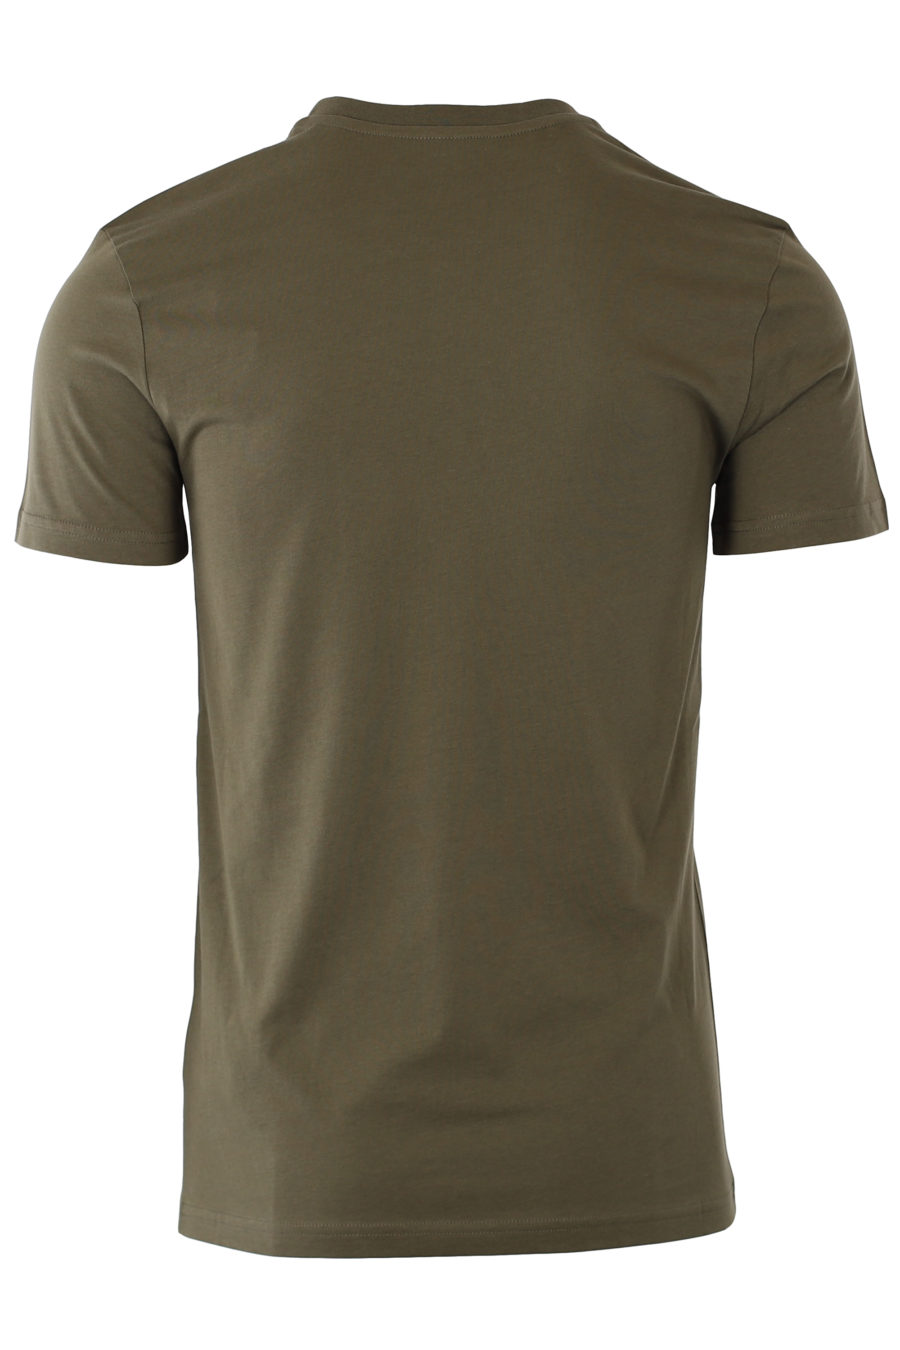 Military green T-shirt with black "fantasy" logo - IMG 9322